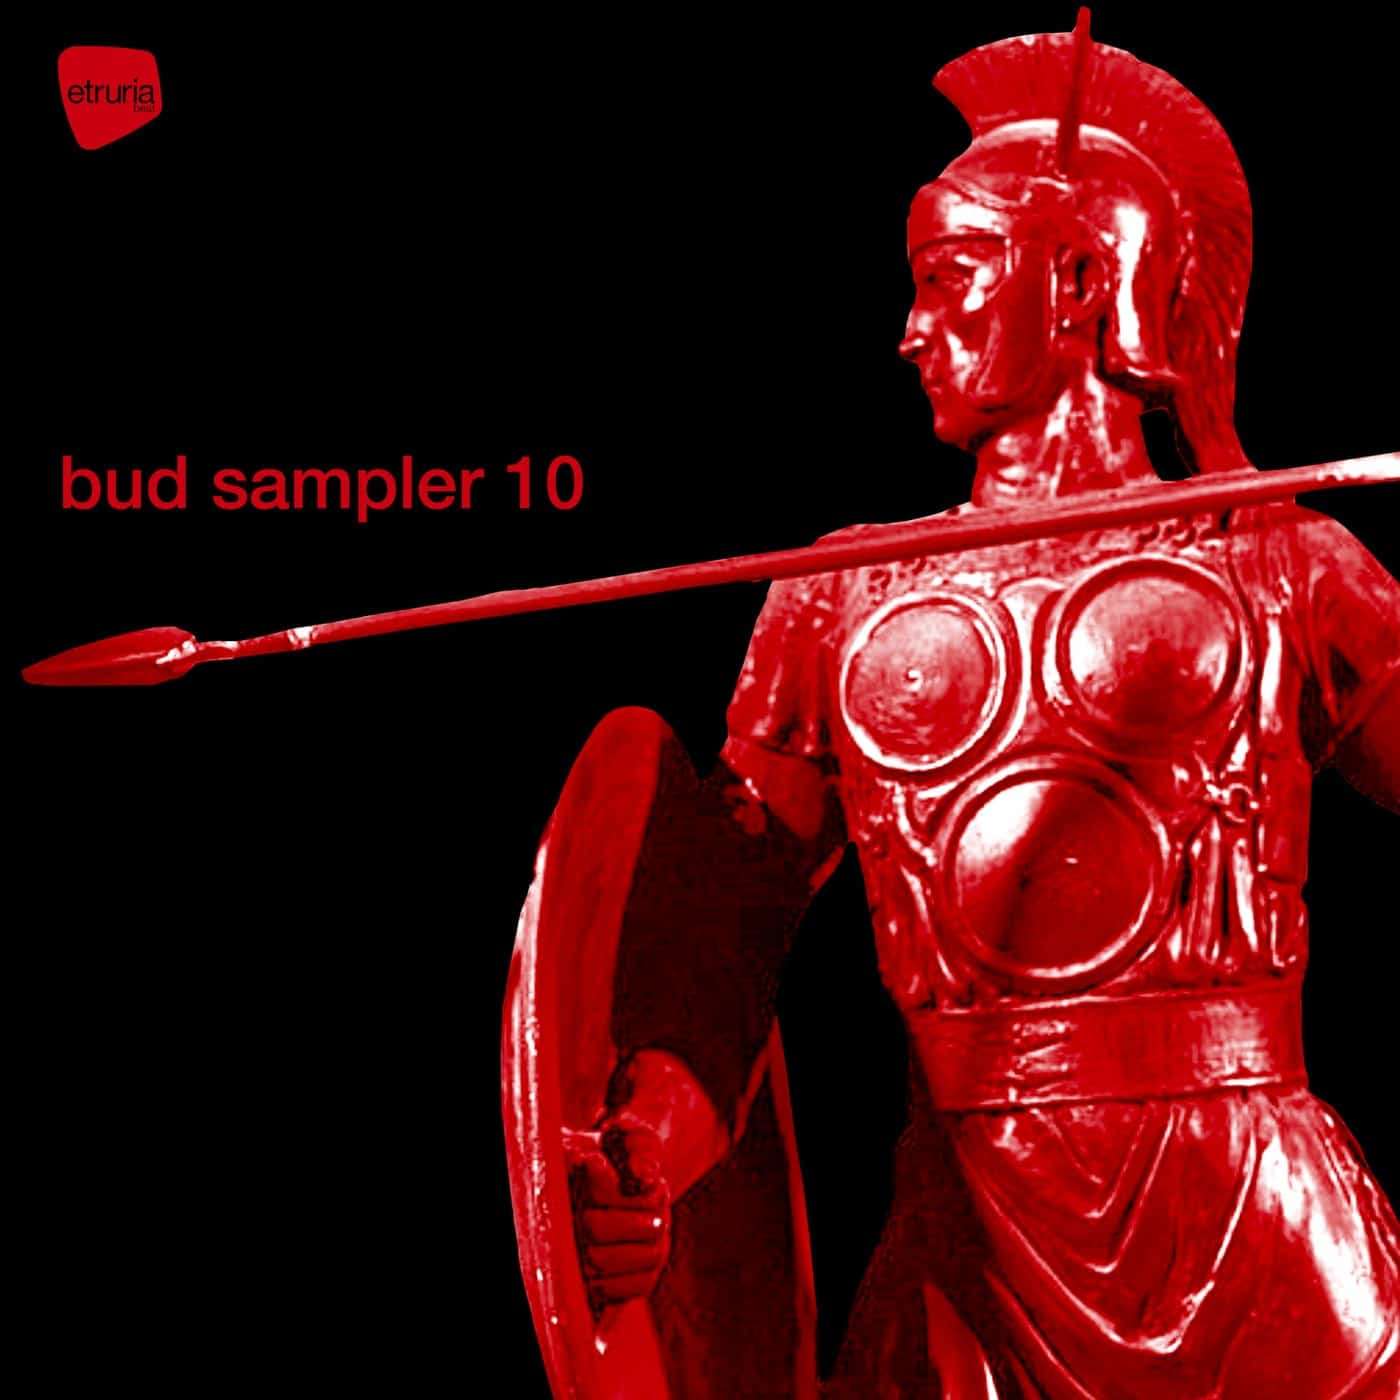 image cover: VA - Bud Sampler 10 / ETBCOMP015